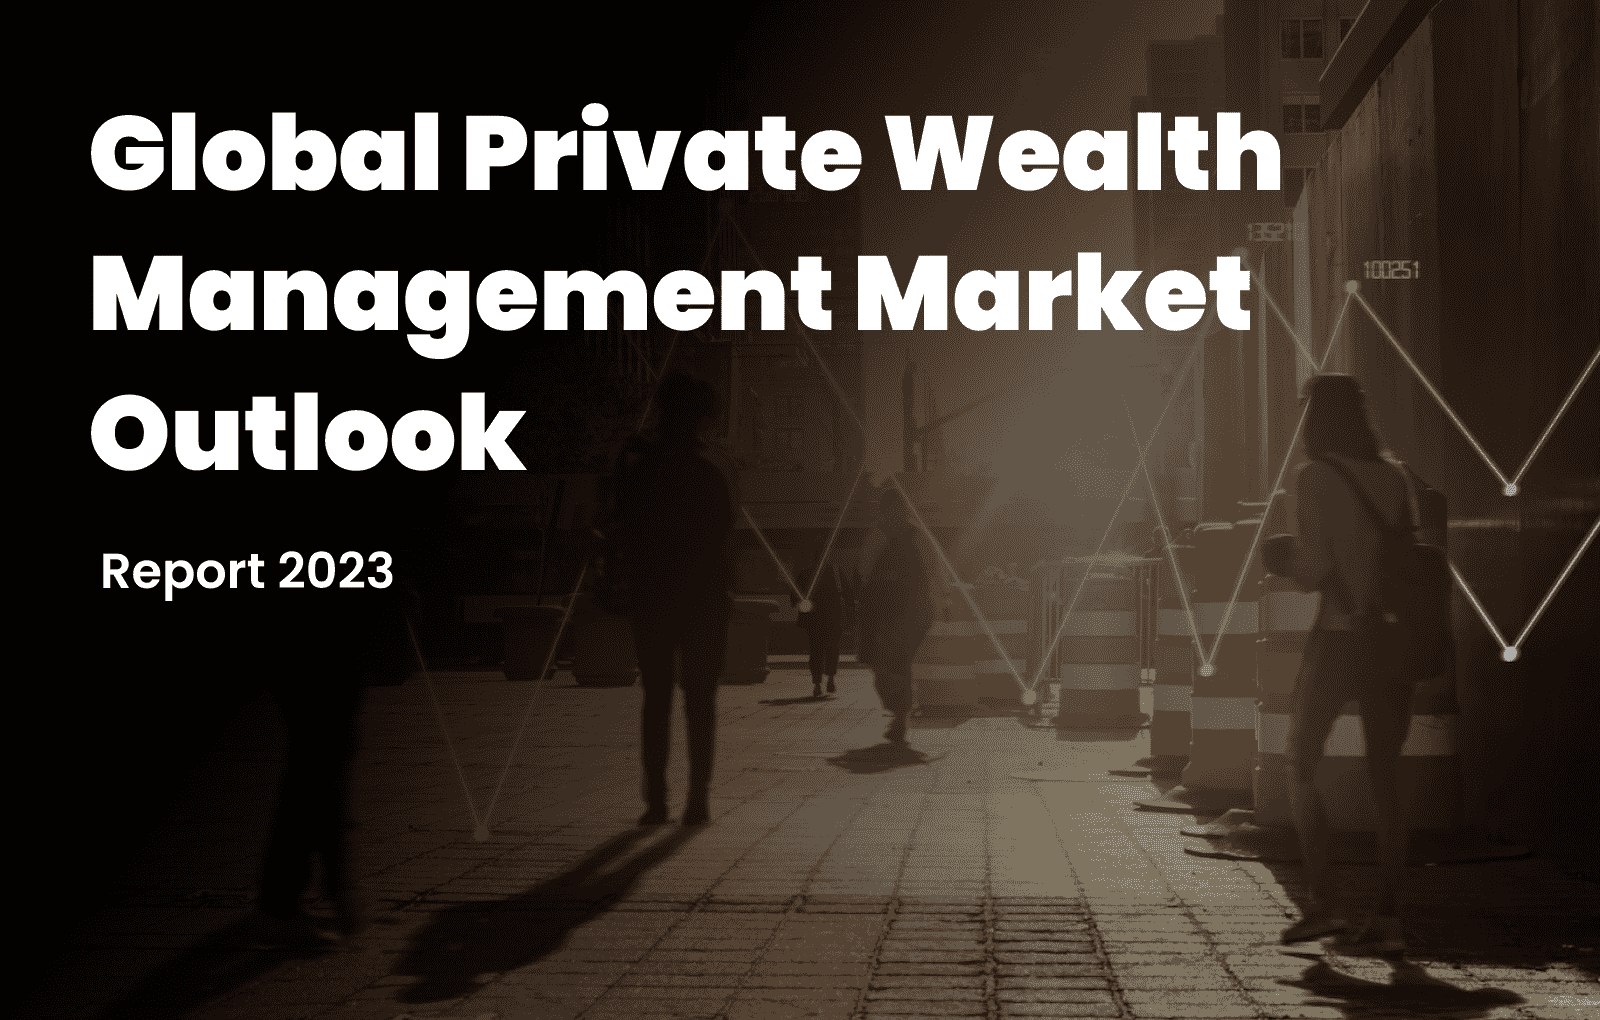 Global Private Wealth Management Market Outlook 2023